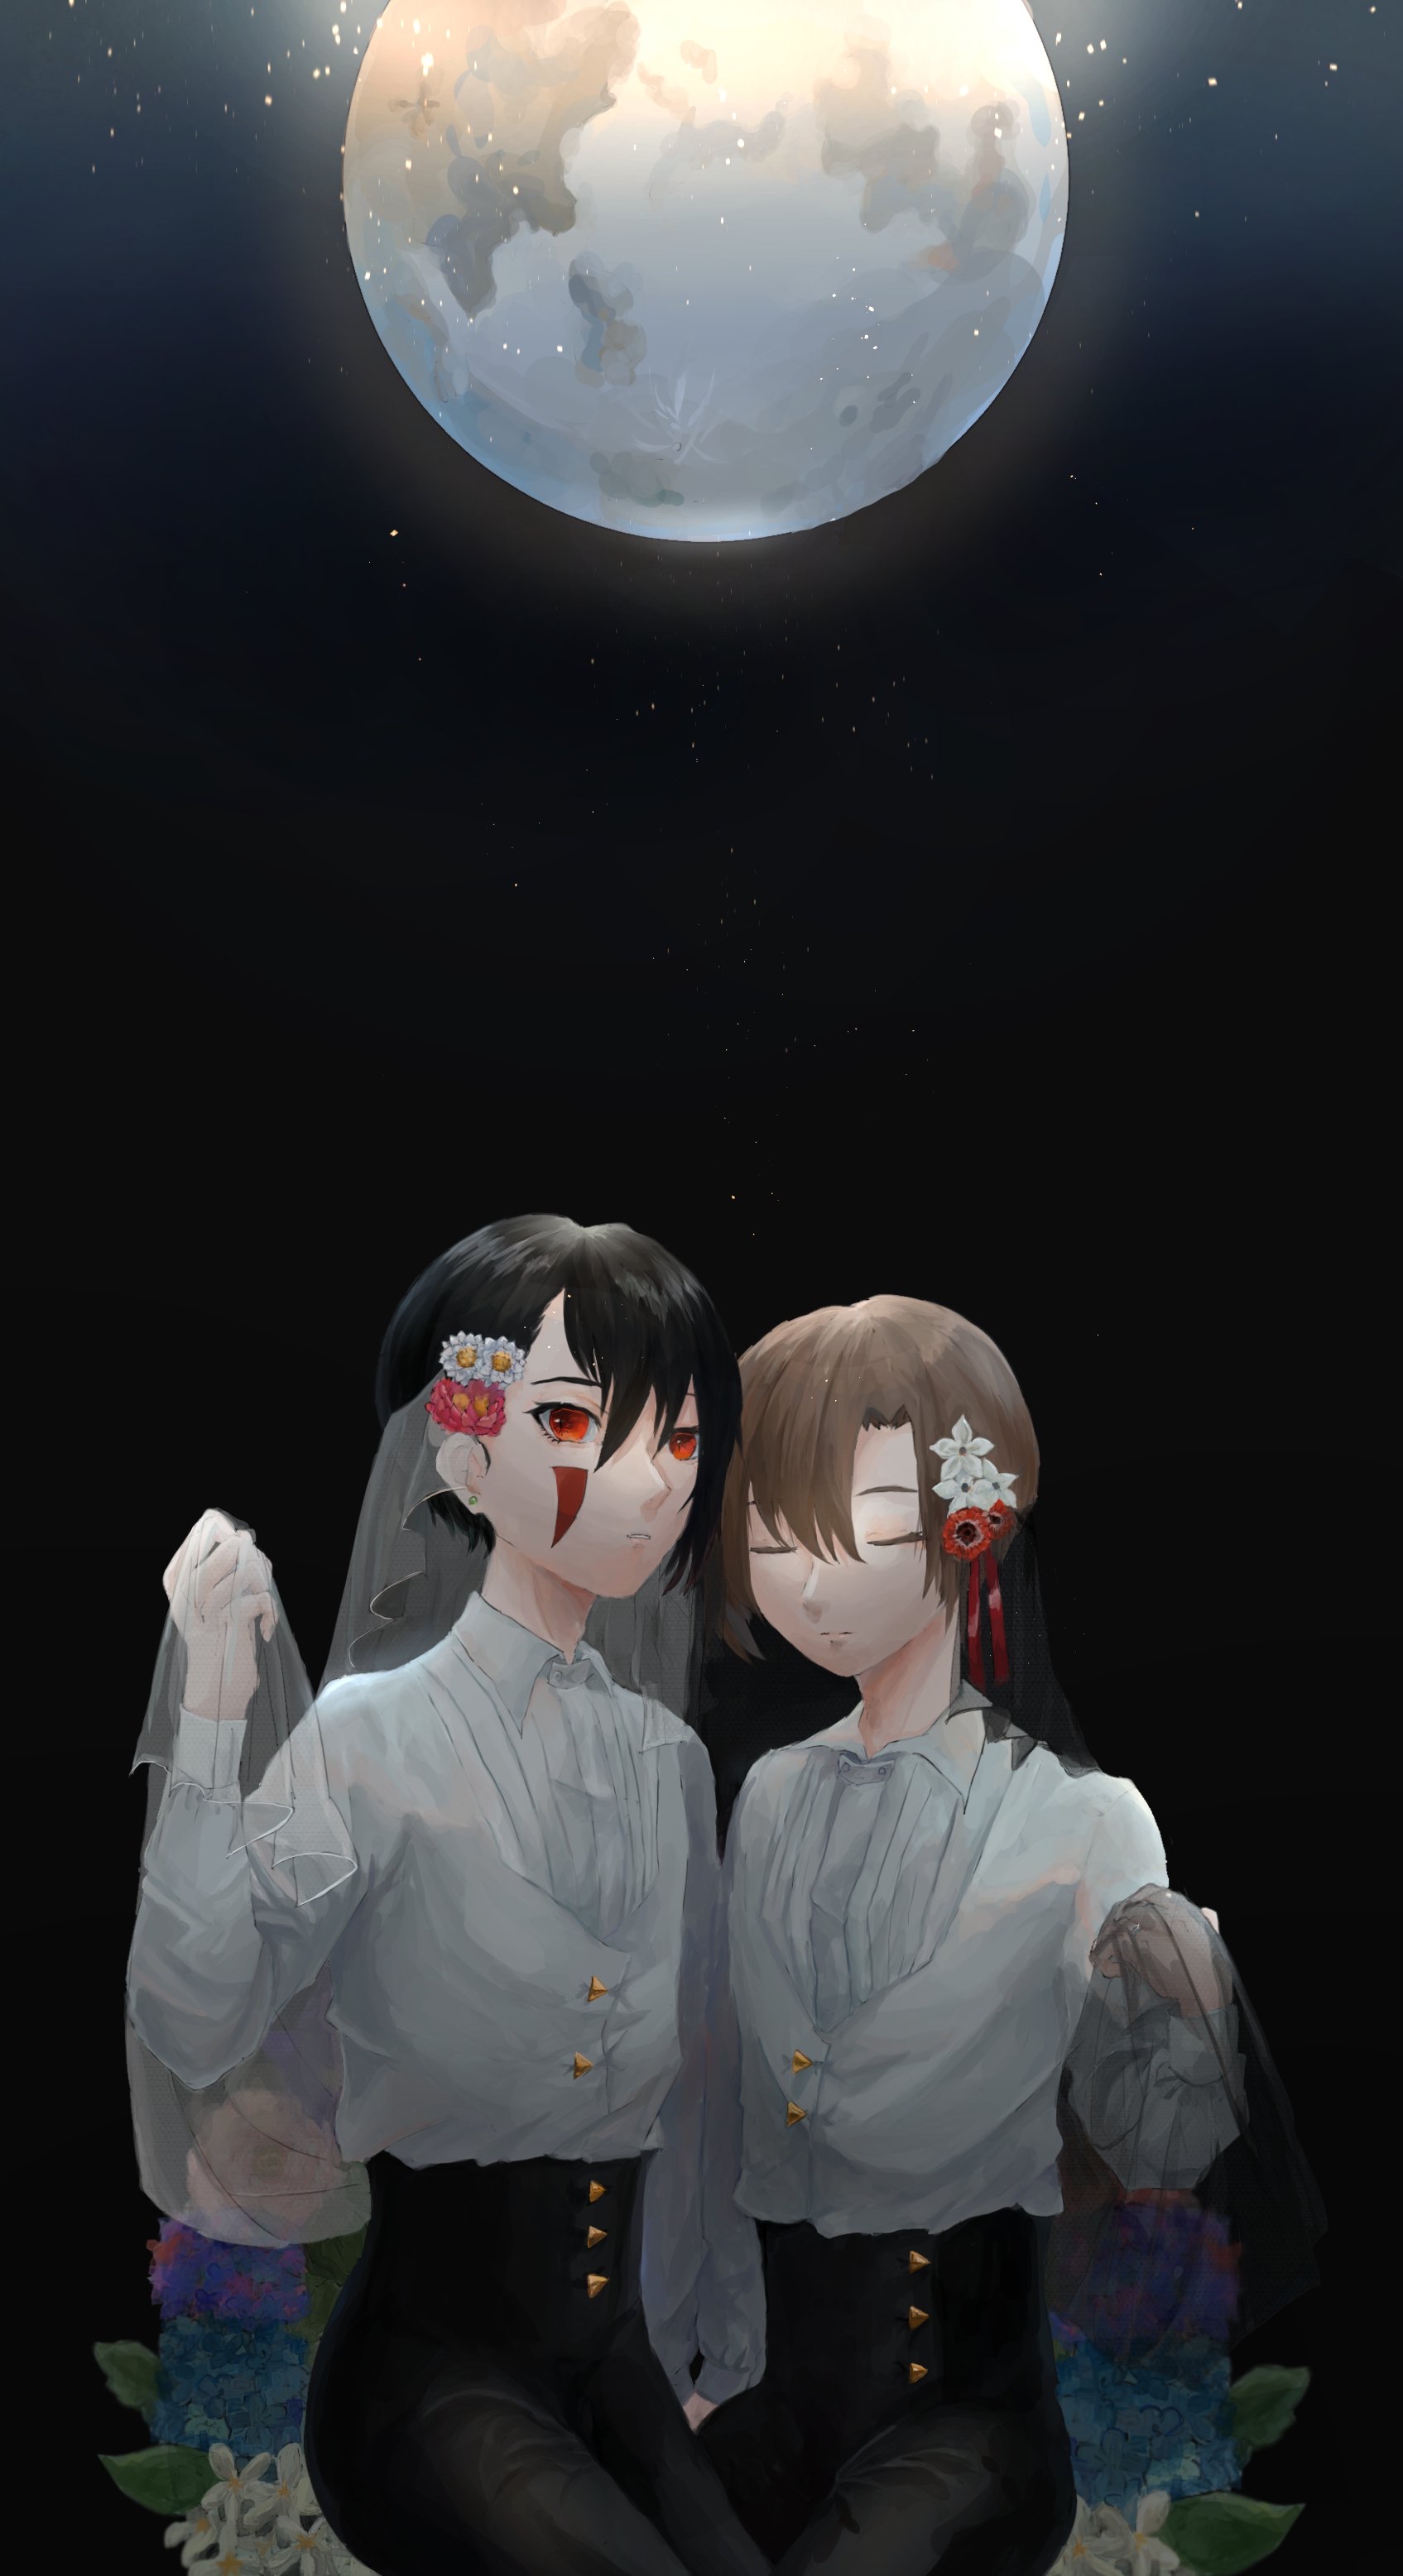 Twins Moon Anime Art